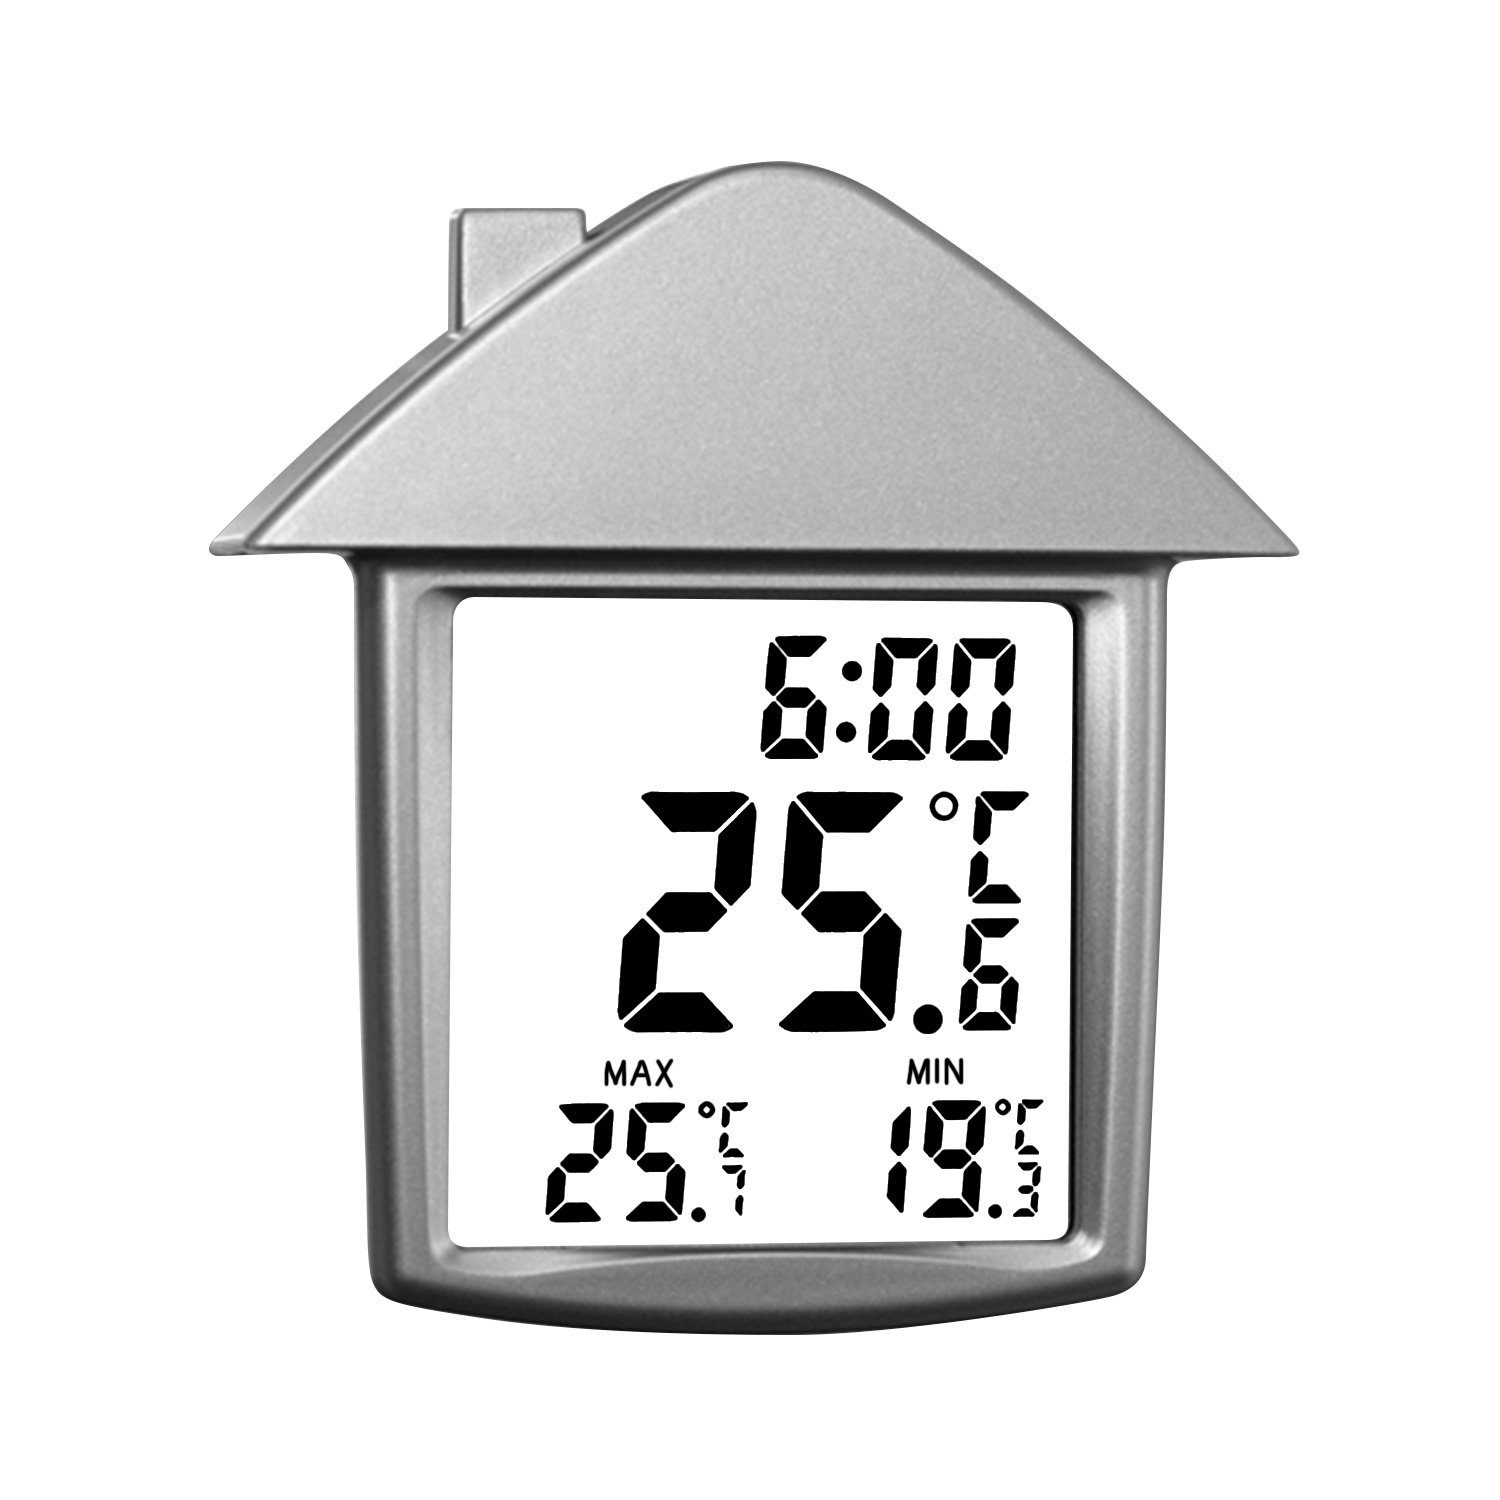 Selva Technik Digitales Fensterthermometer, Wetterinstrument, wetterfest, 90 x 98 mm Wetterstation